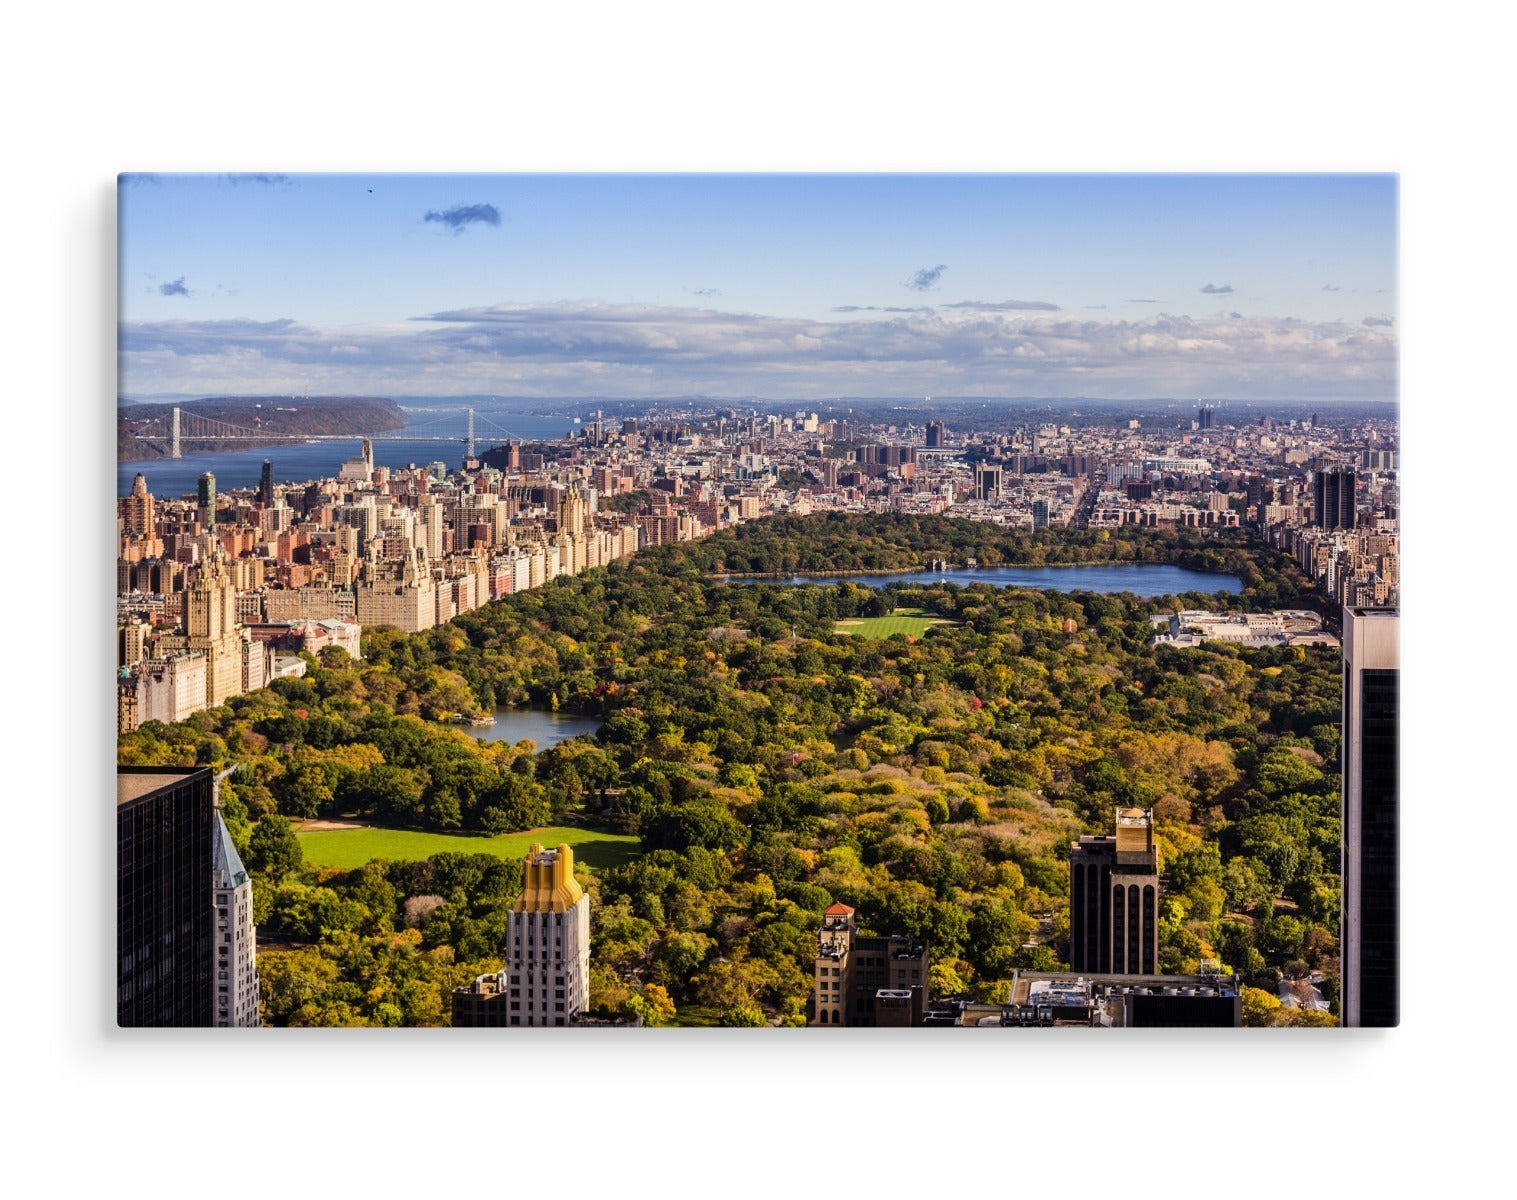 Luftfoto av new york city